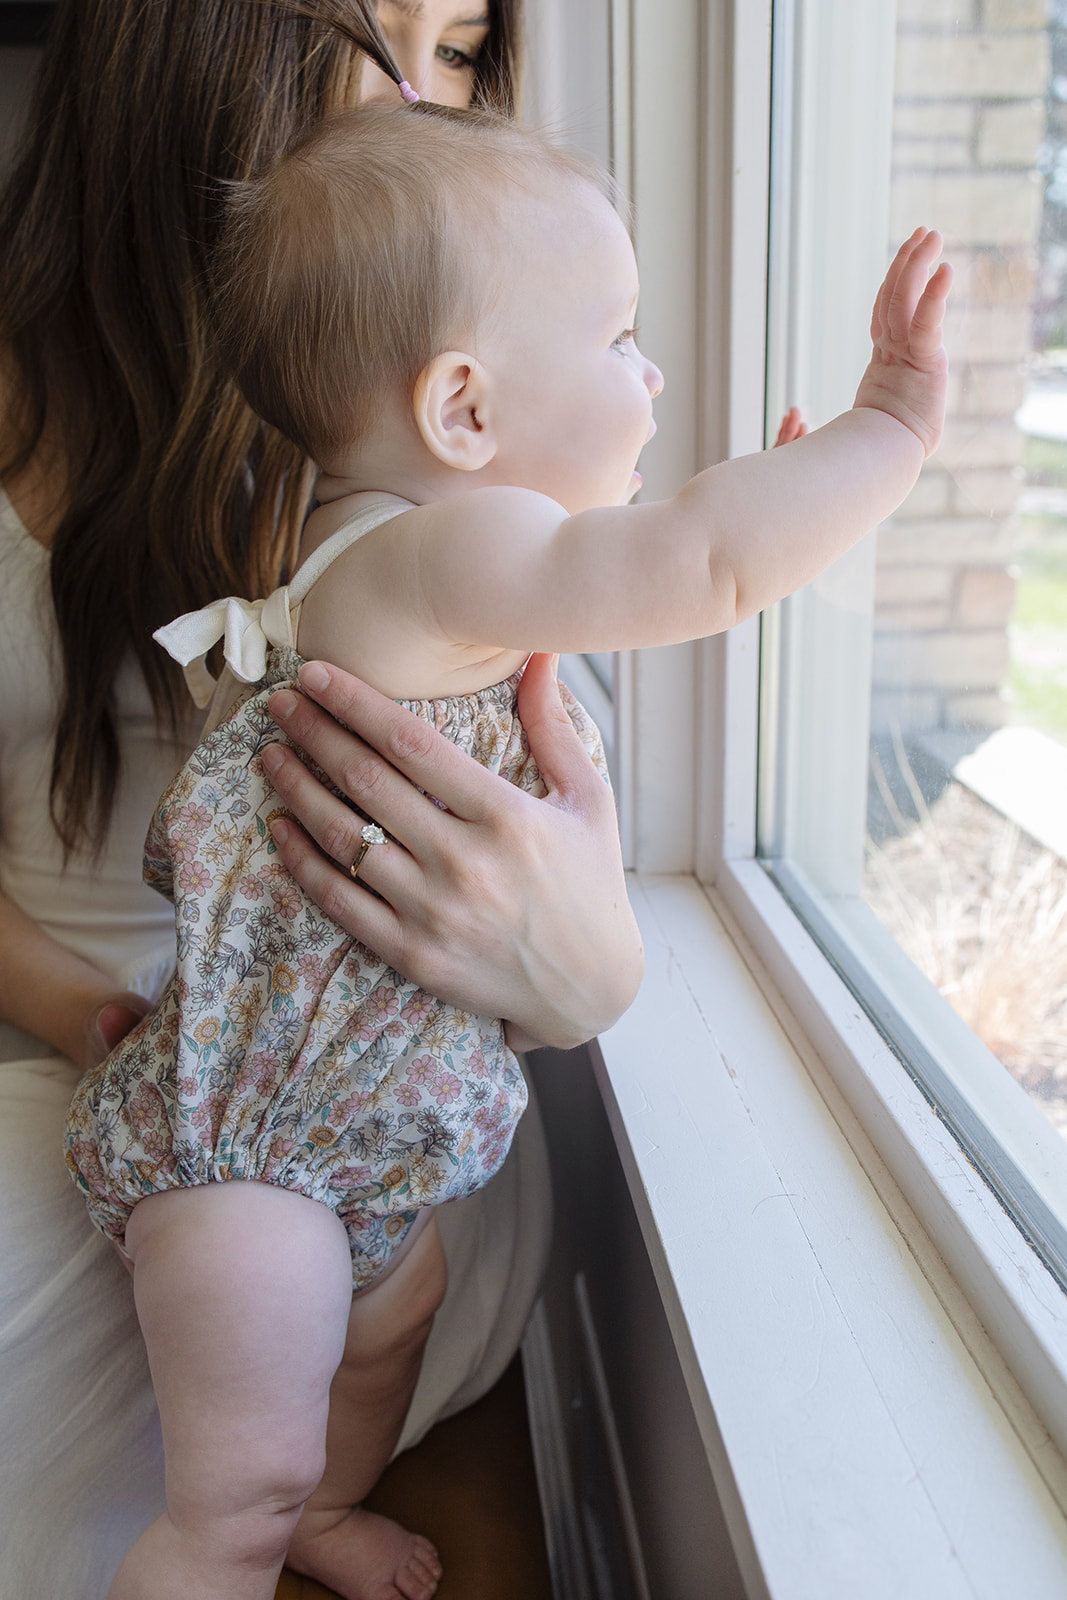 9 month old girl Minnesota Photoshoot